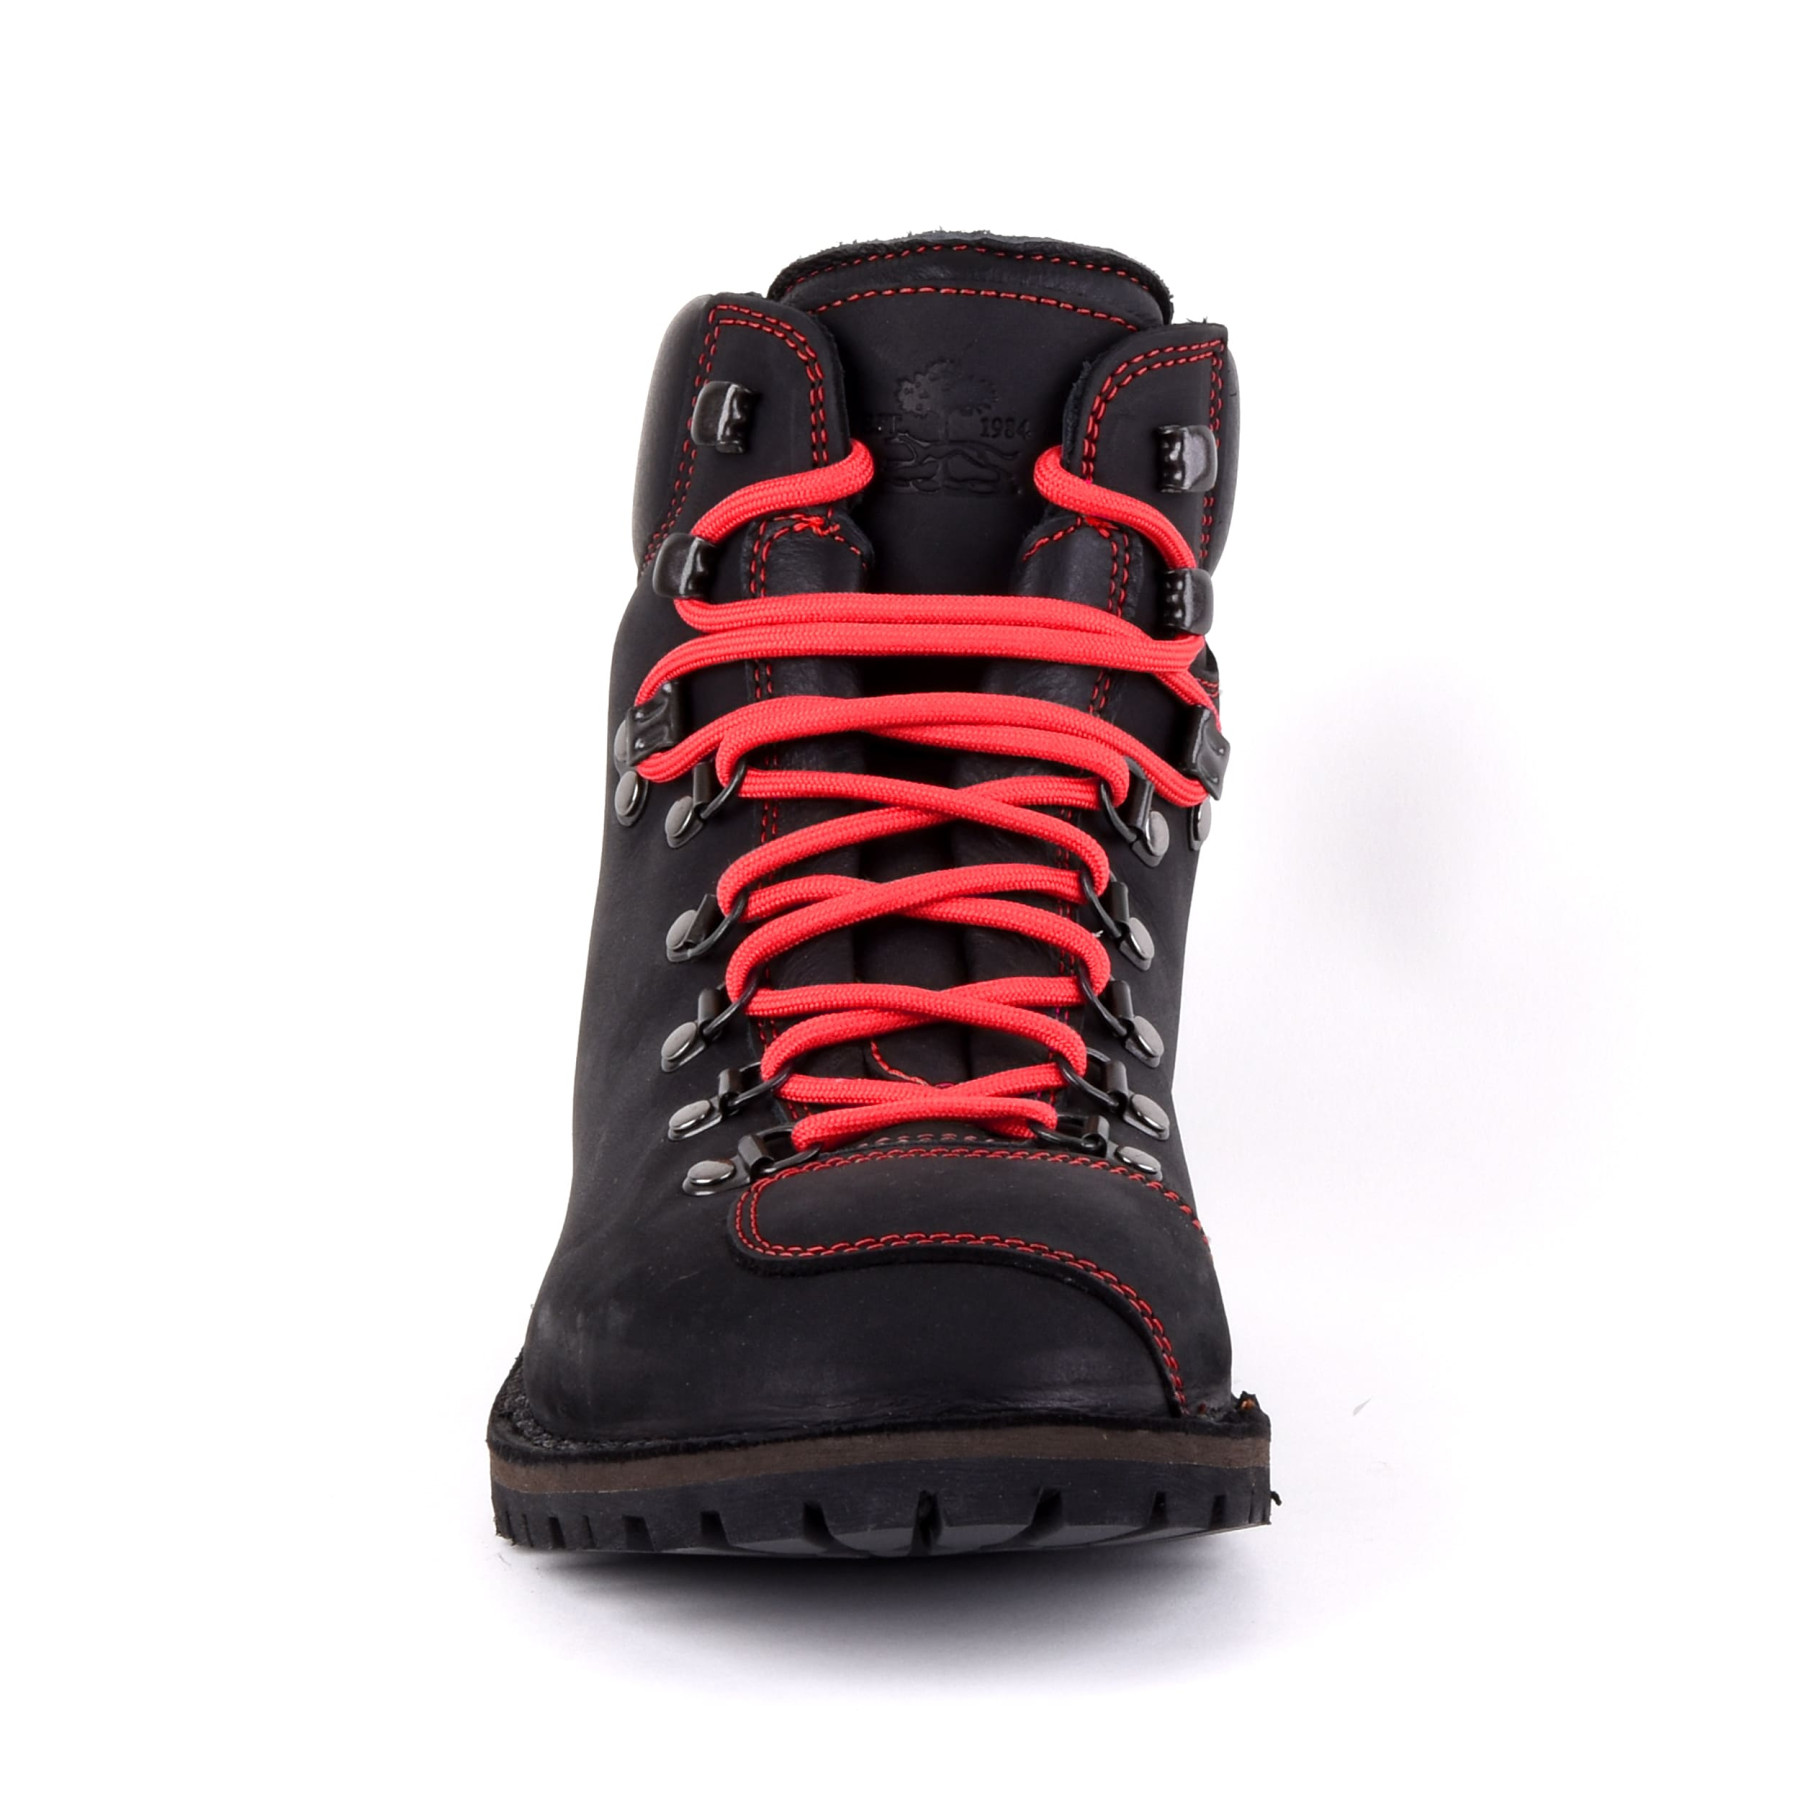 Biker Boot Adventure Denver Black, black gents boot, red stitching